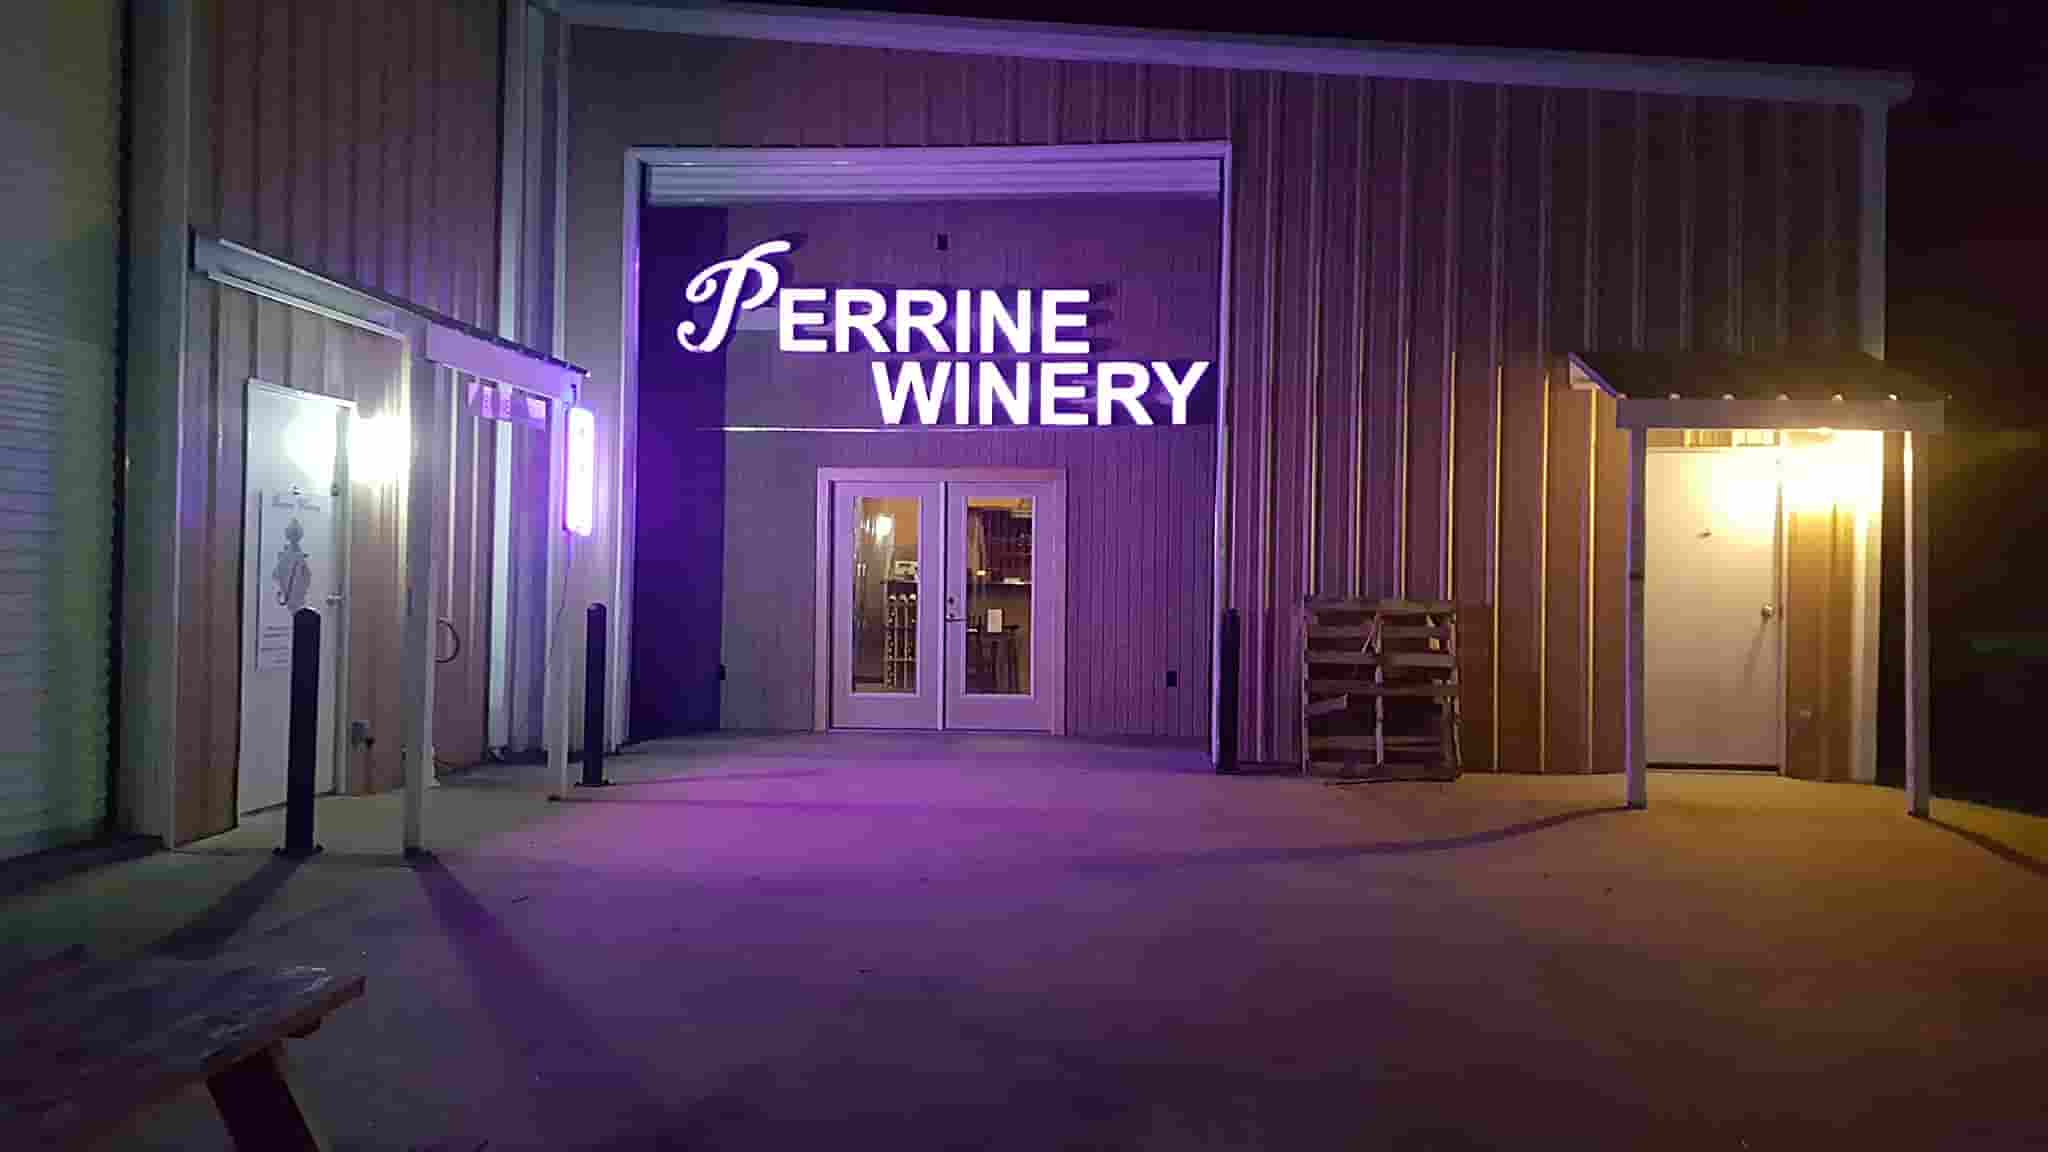 The Perrine Winery